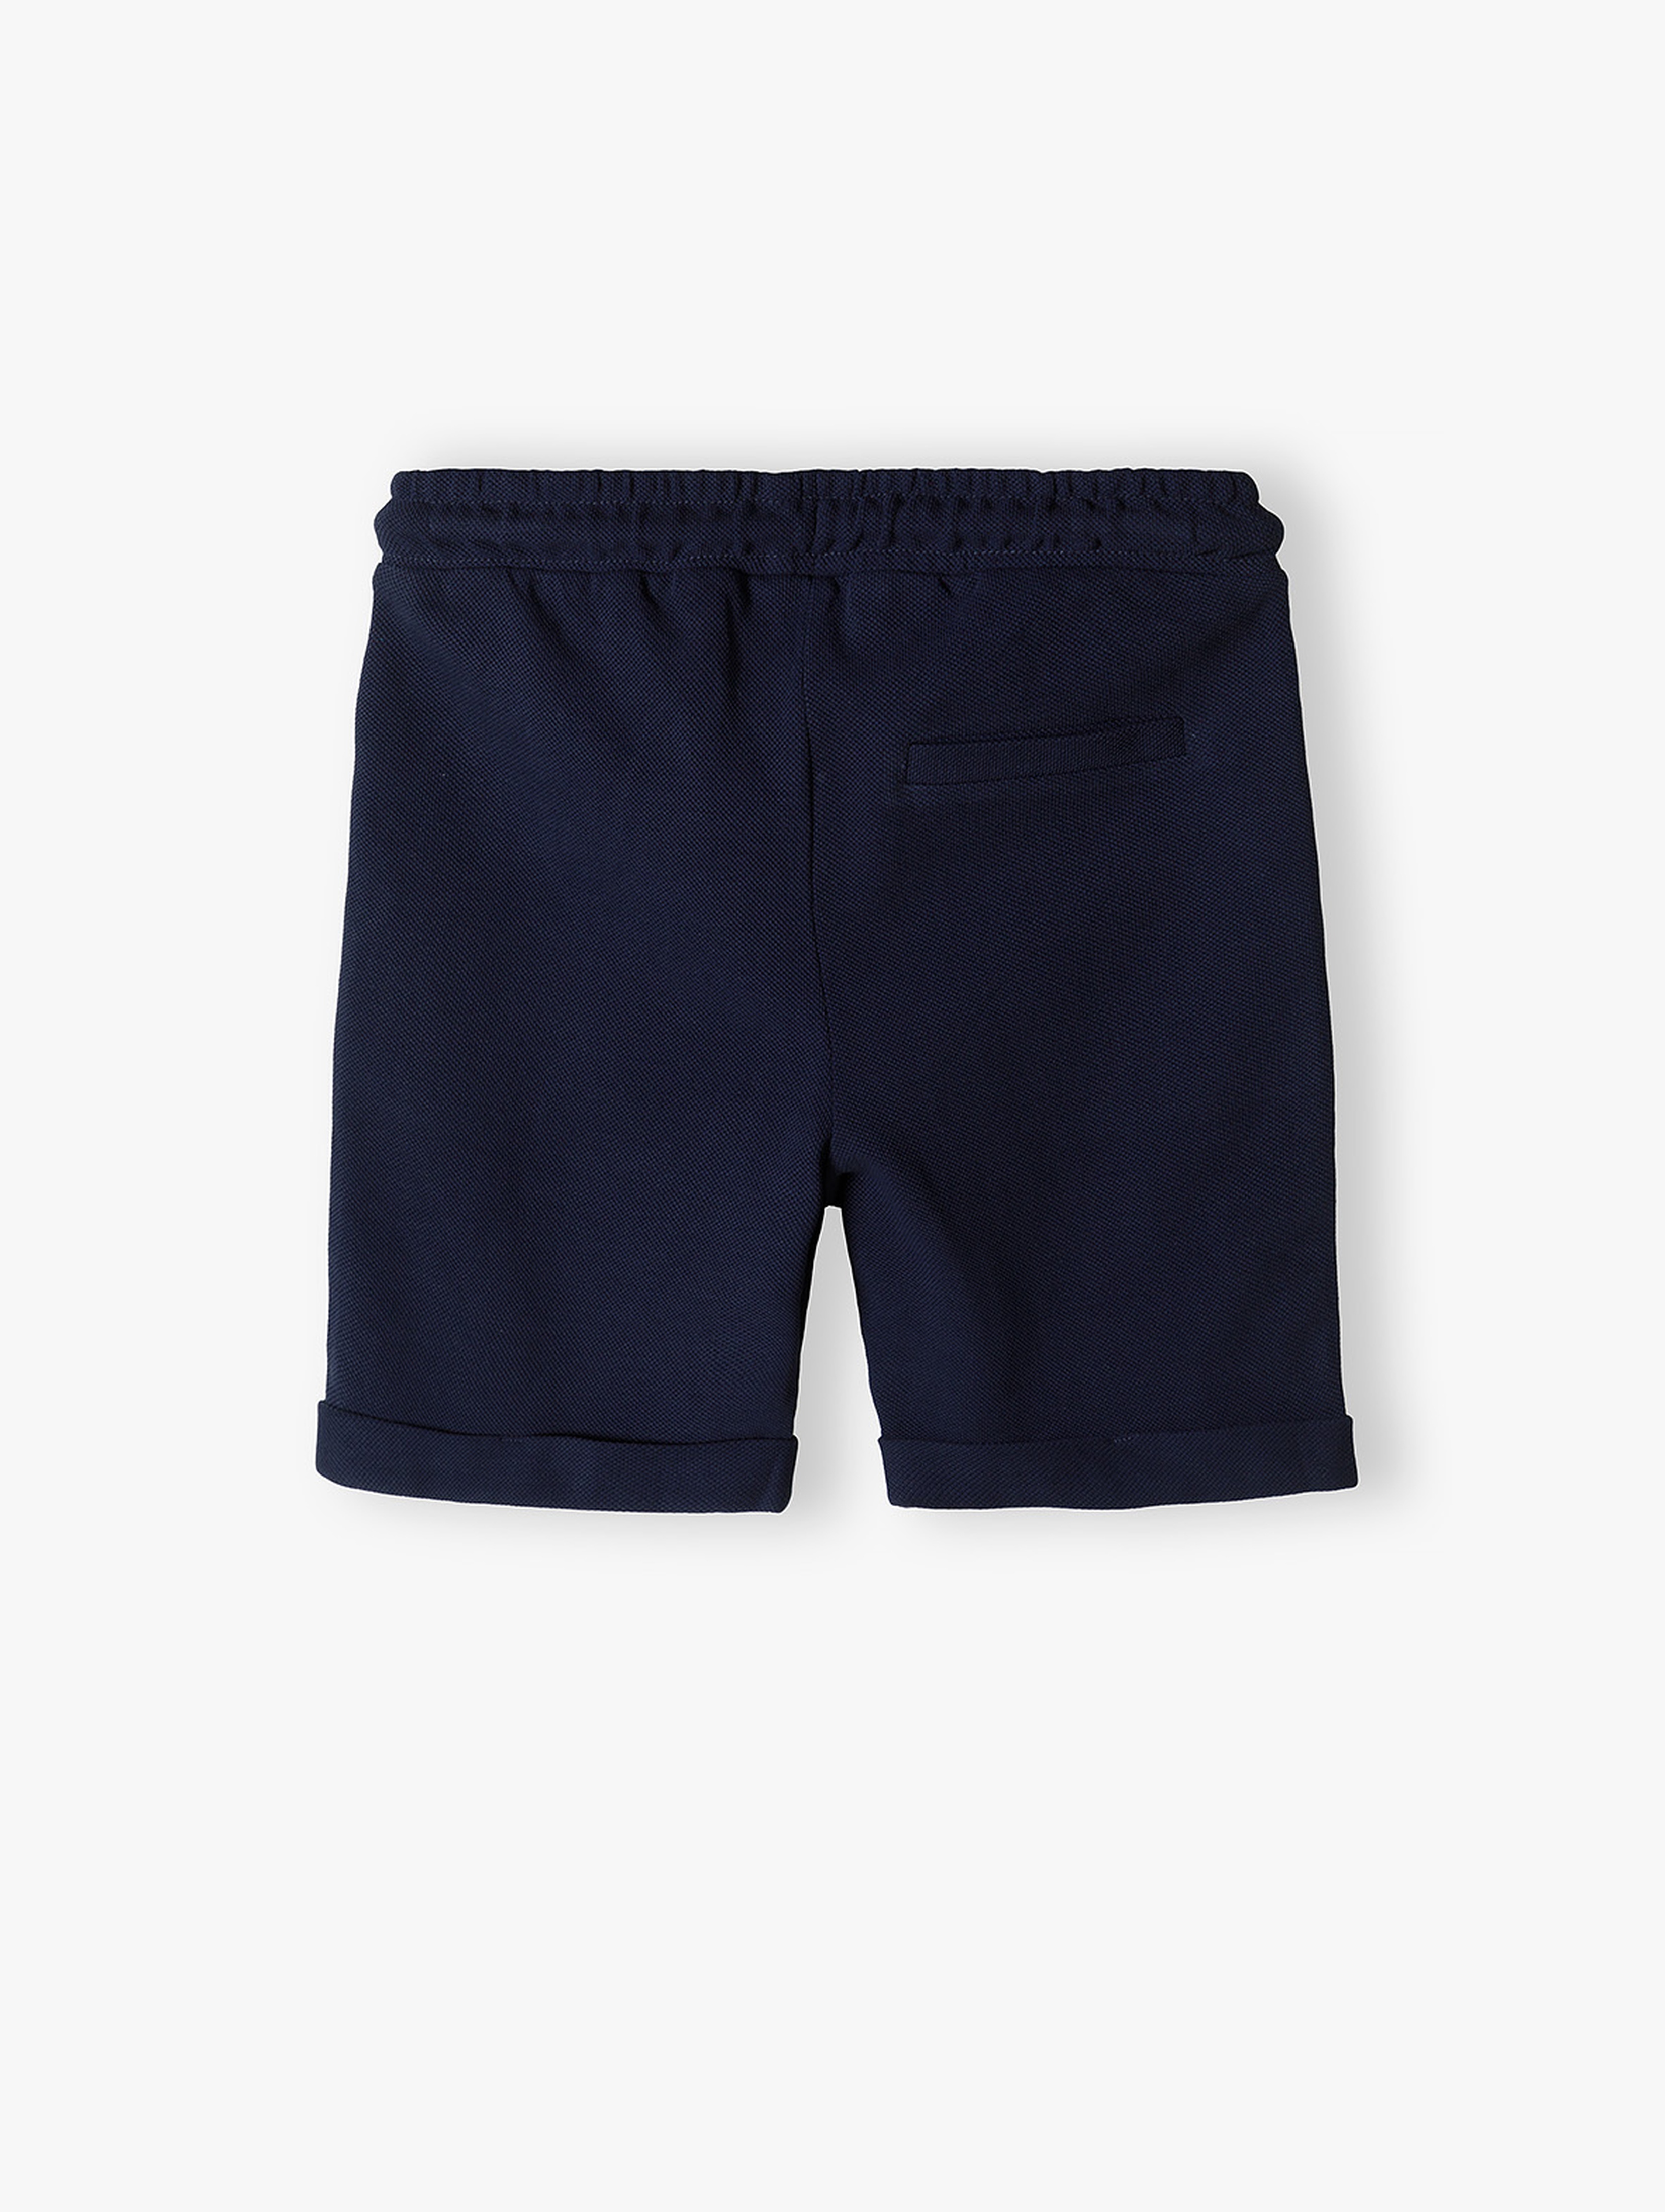 Granatowe spodnie na lato dla chłopca - Lincoln&Sharks